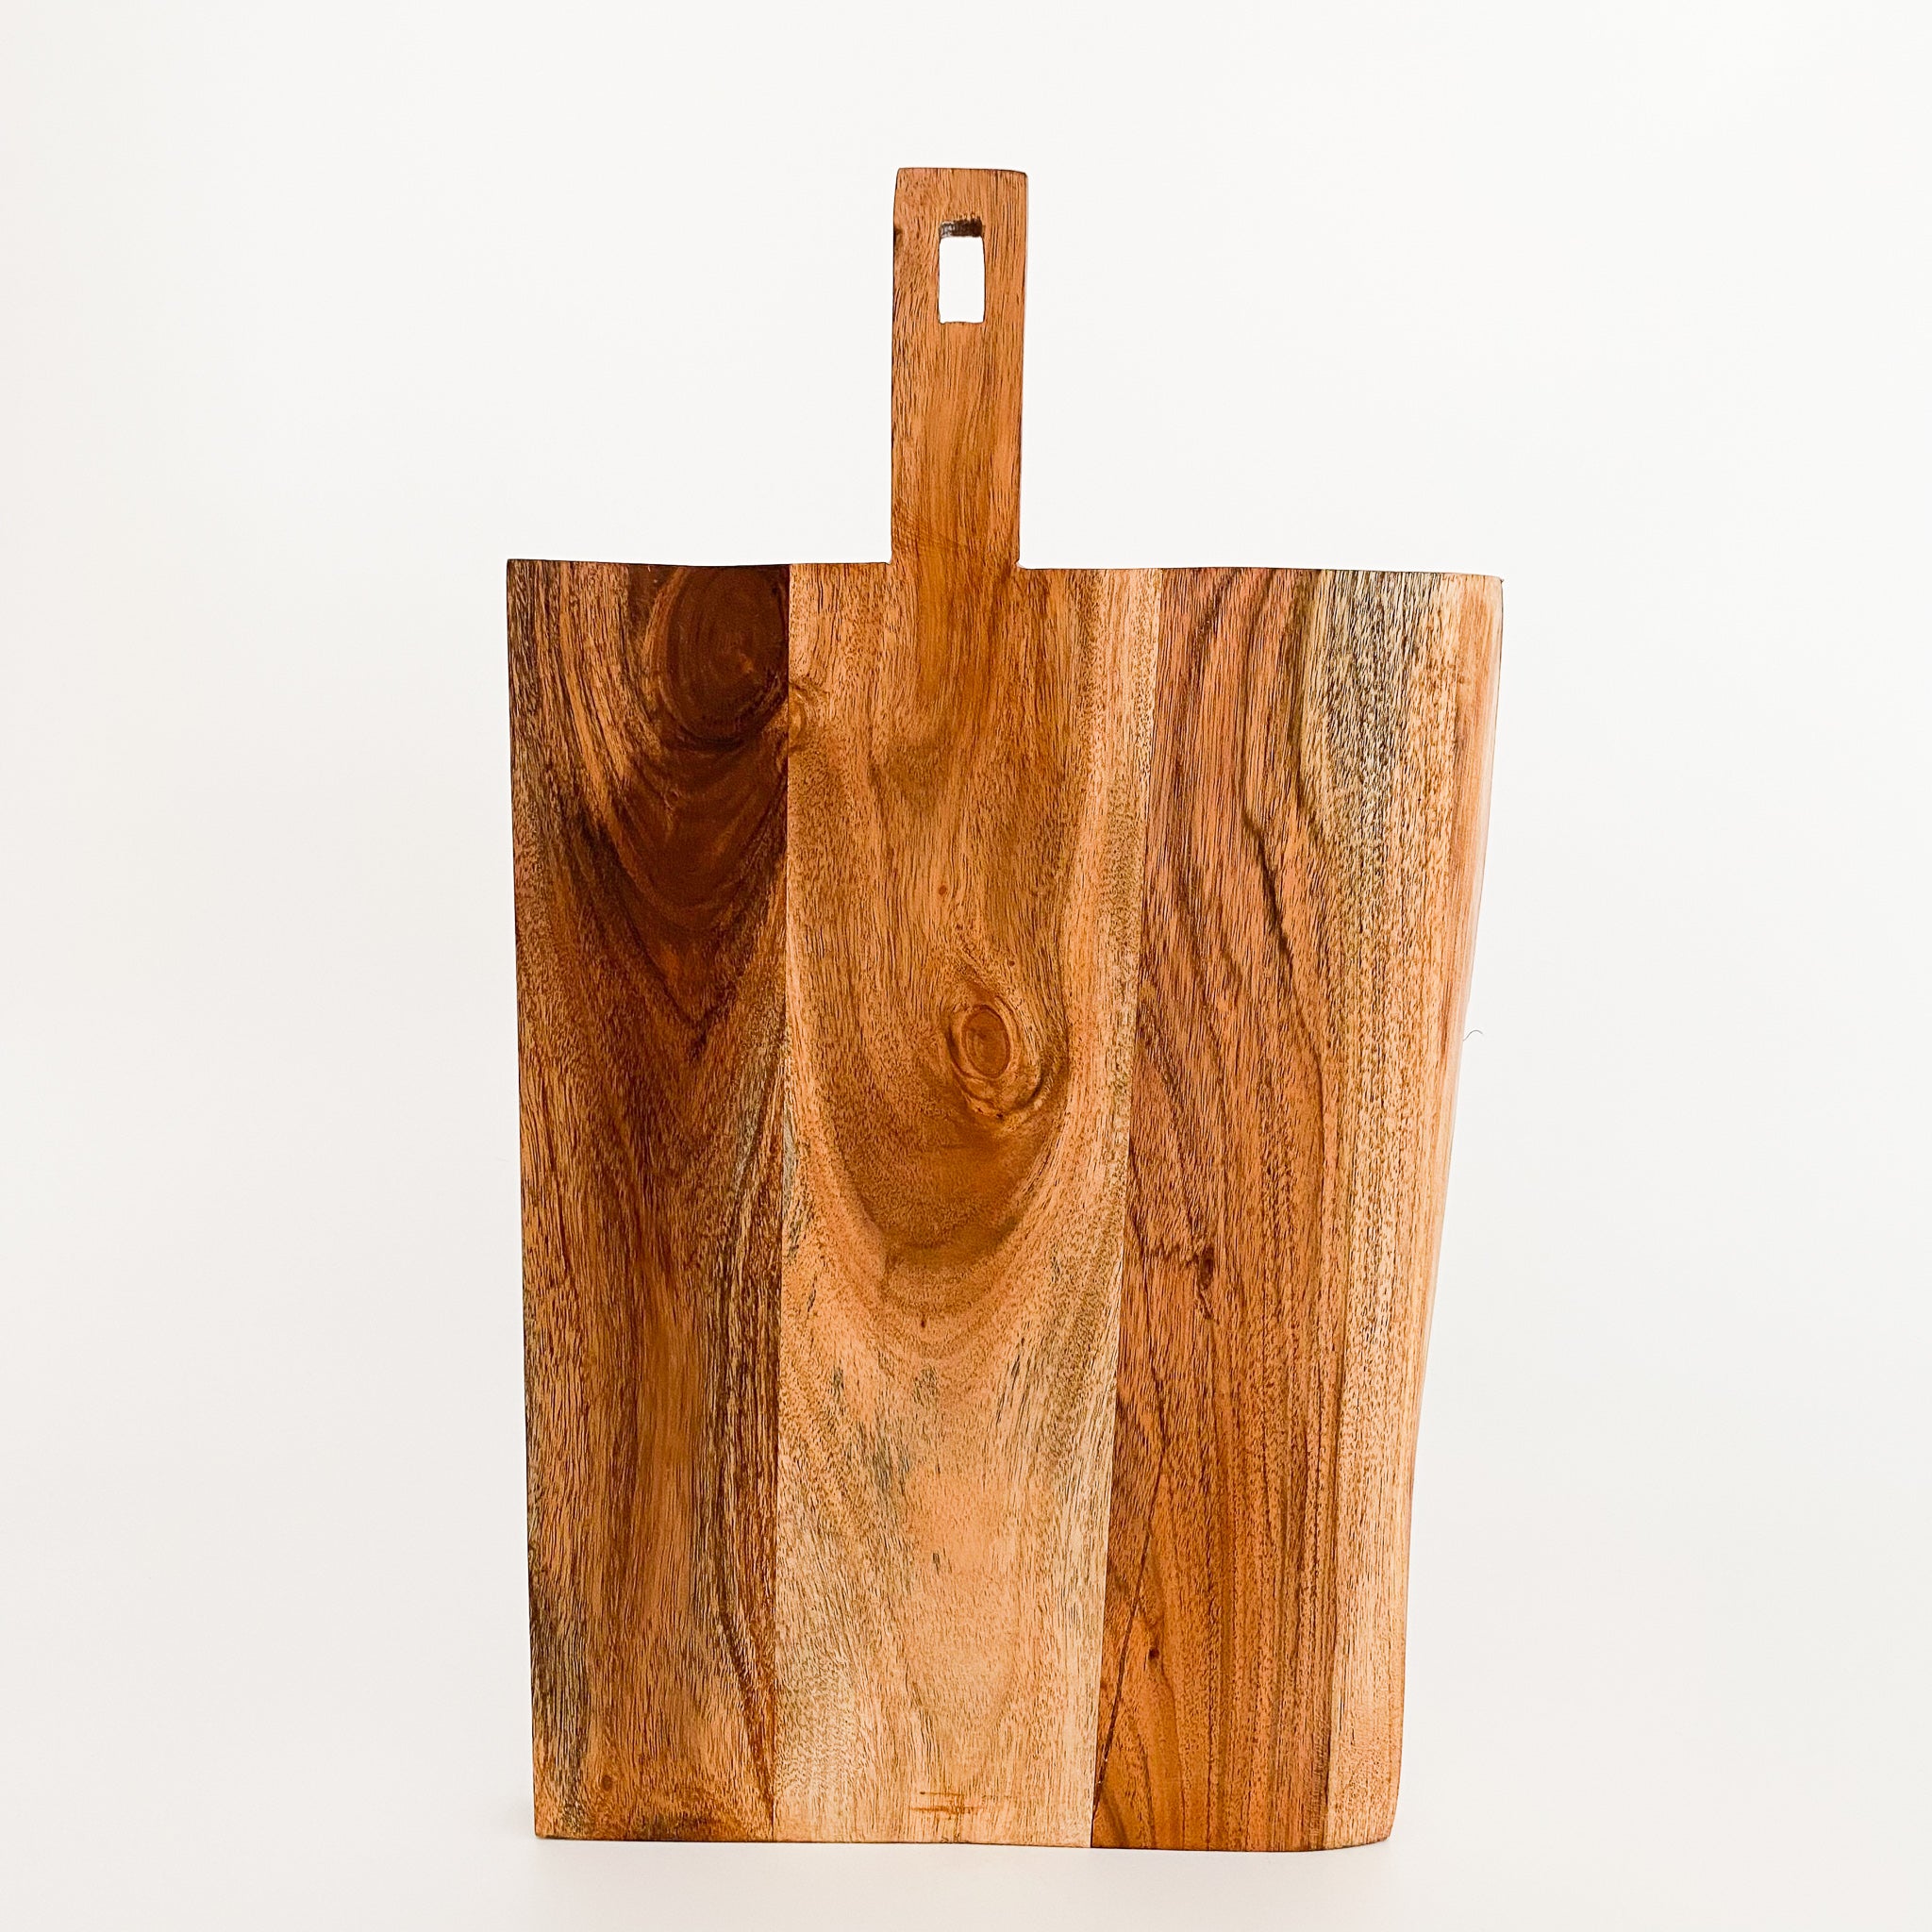 Acadia Wood Cutting Board